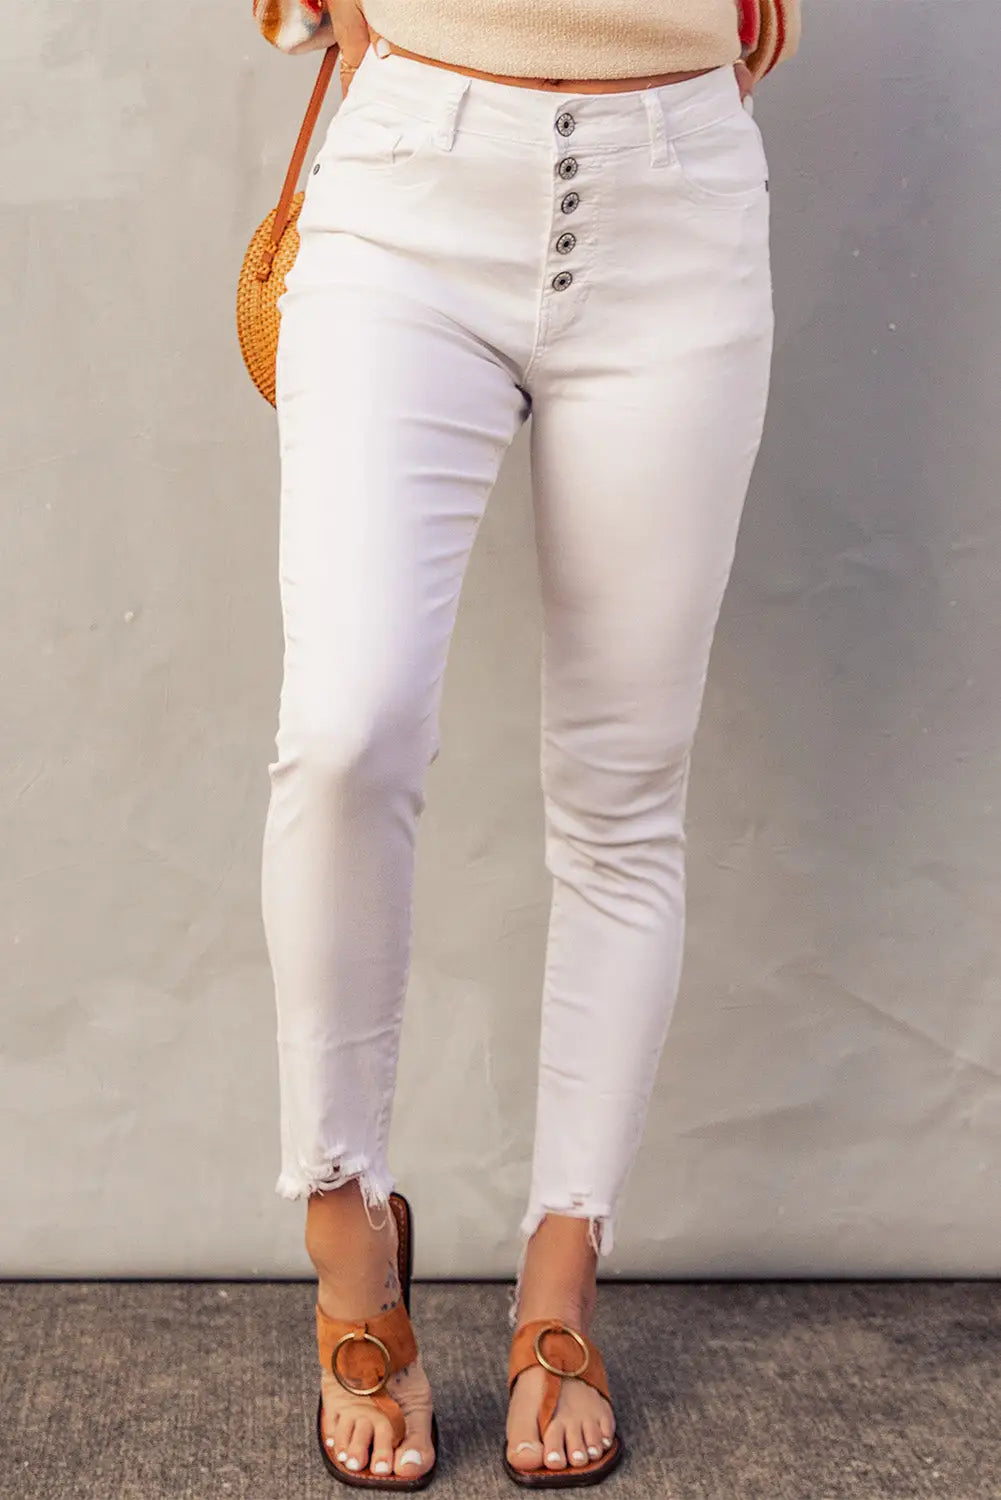 Green plain high waist buttons frayed cropped denim jeans - white / xxs / 98% cotton + 2% elastane